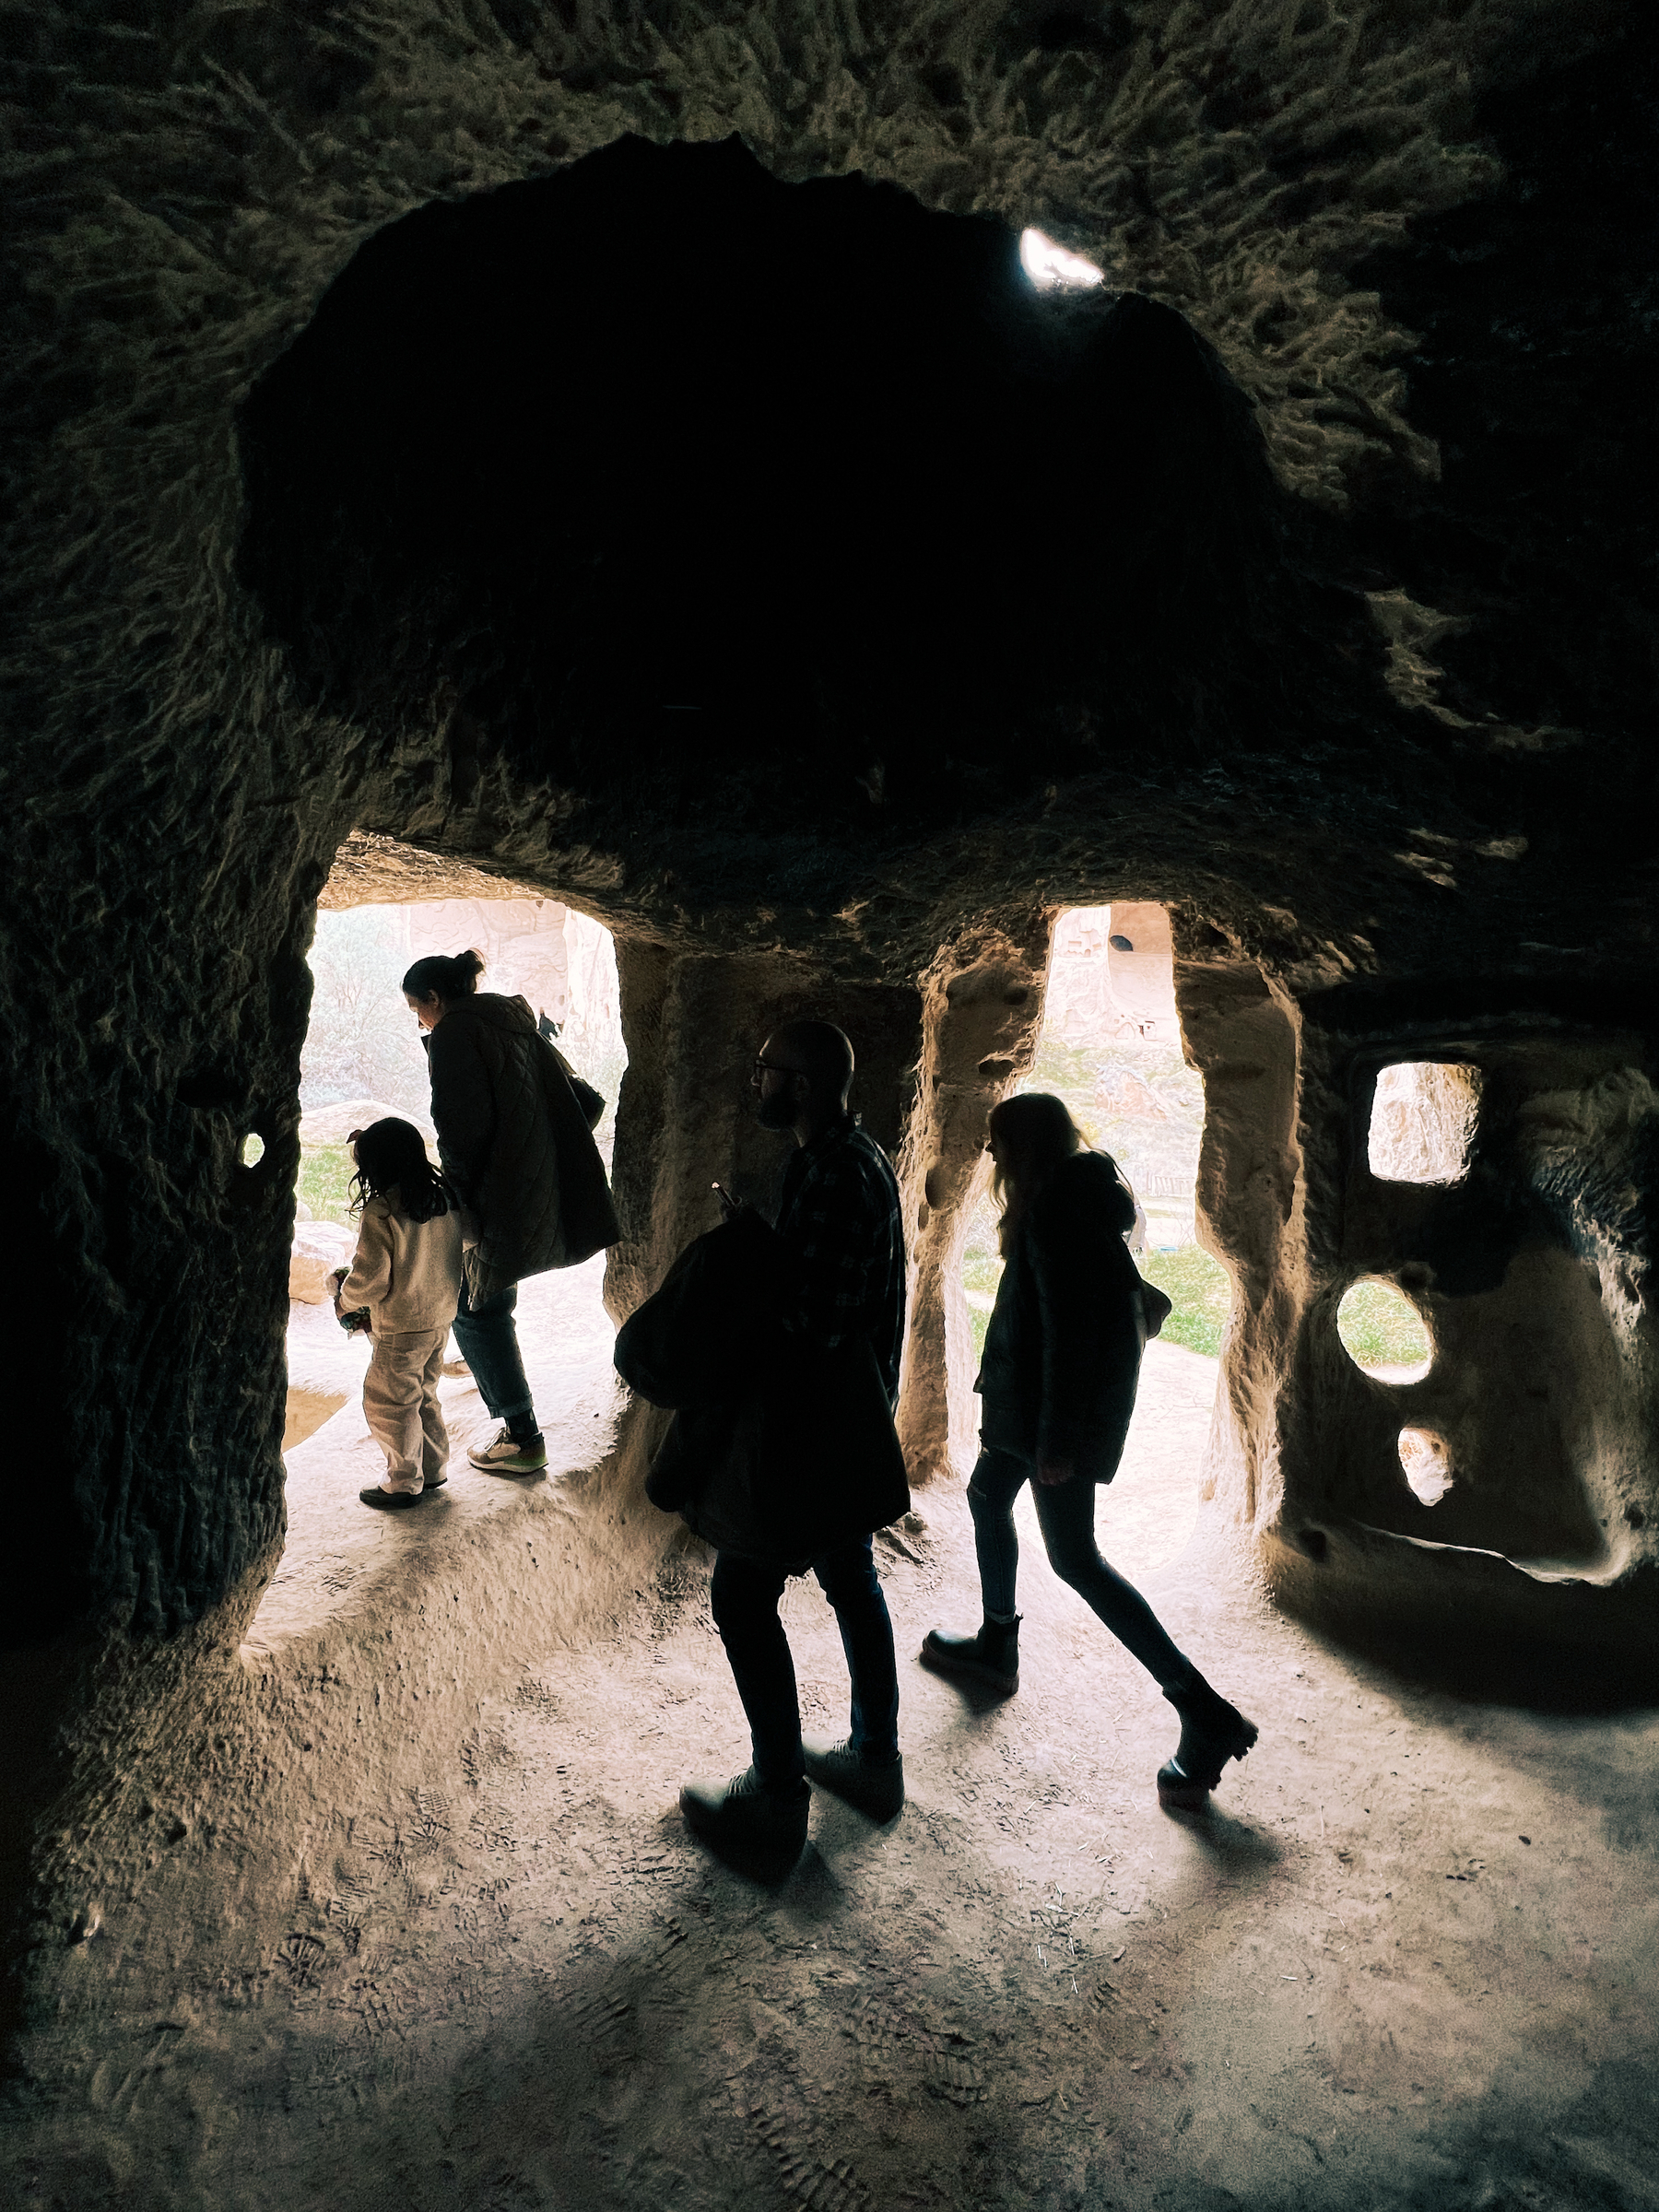 People walk in a cavern.